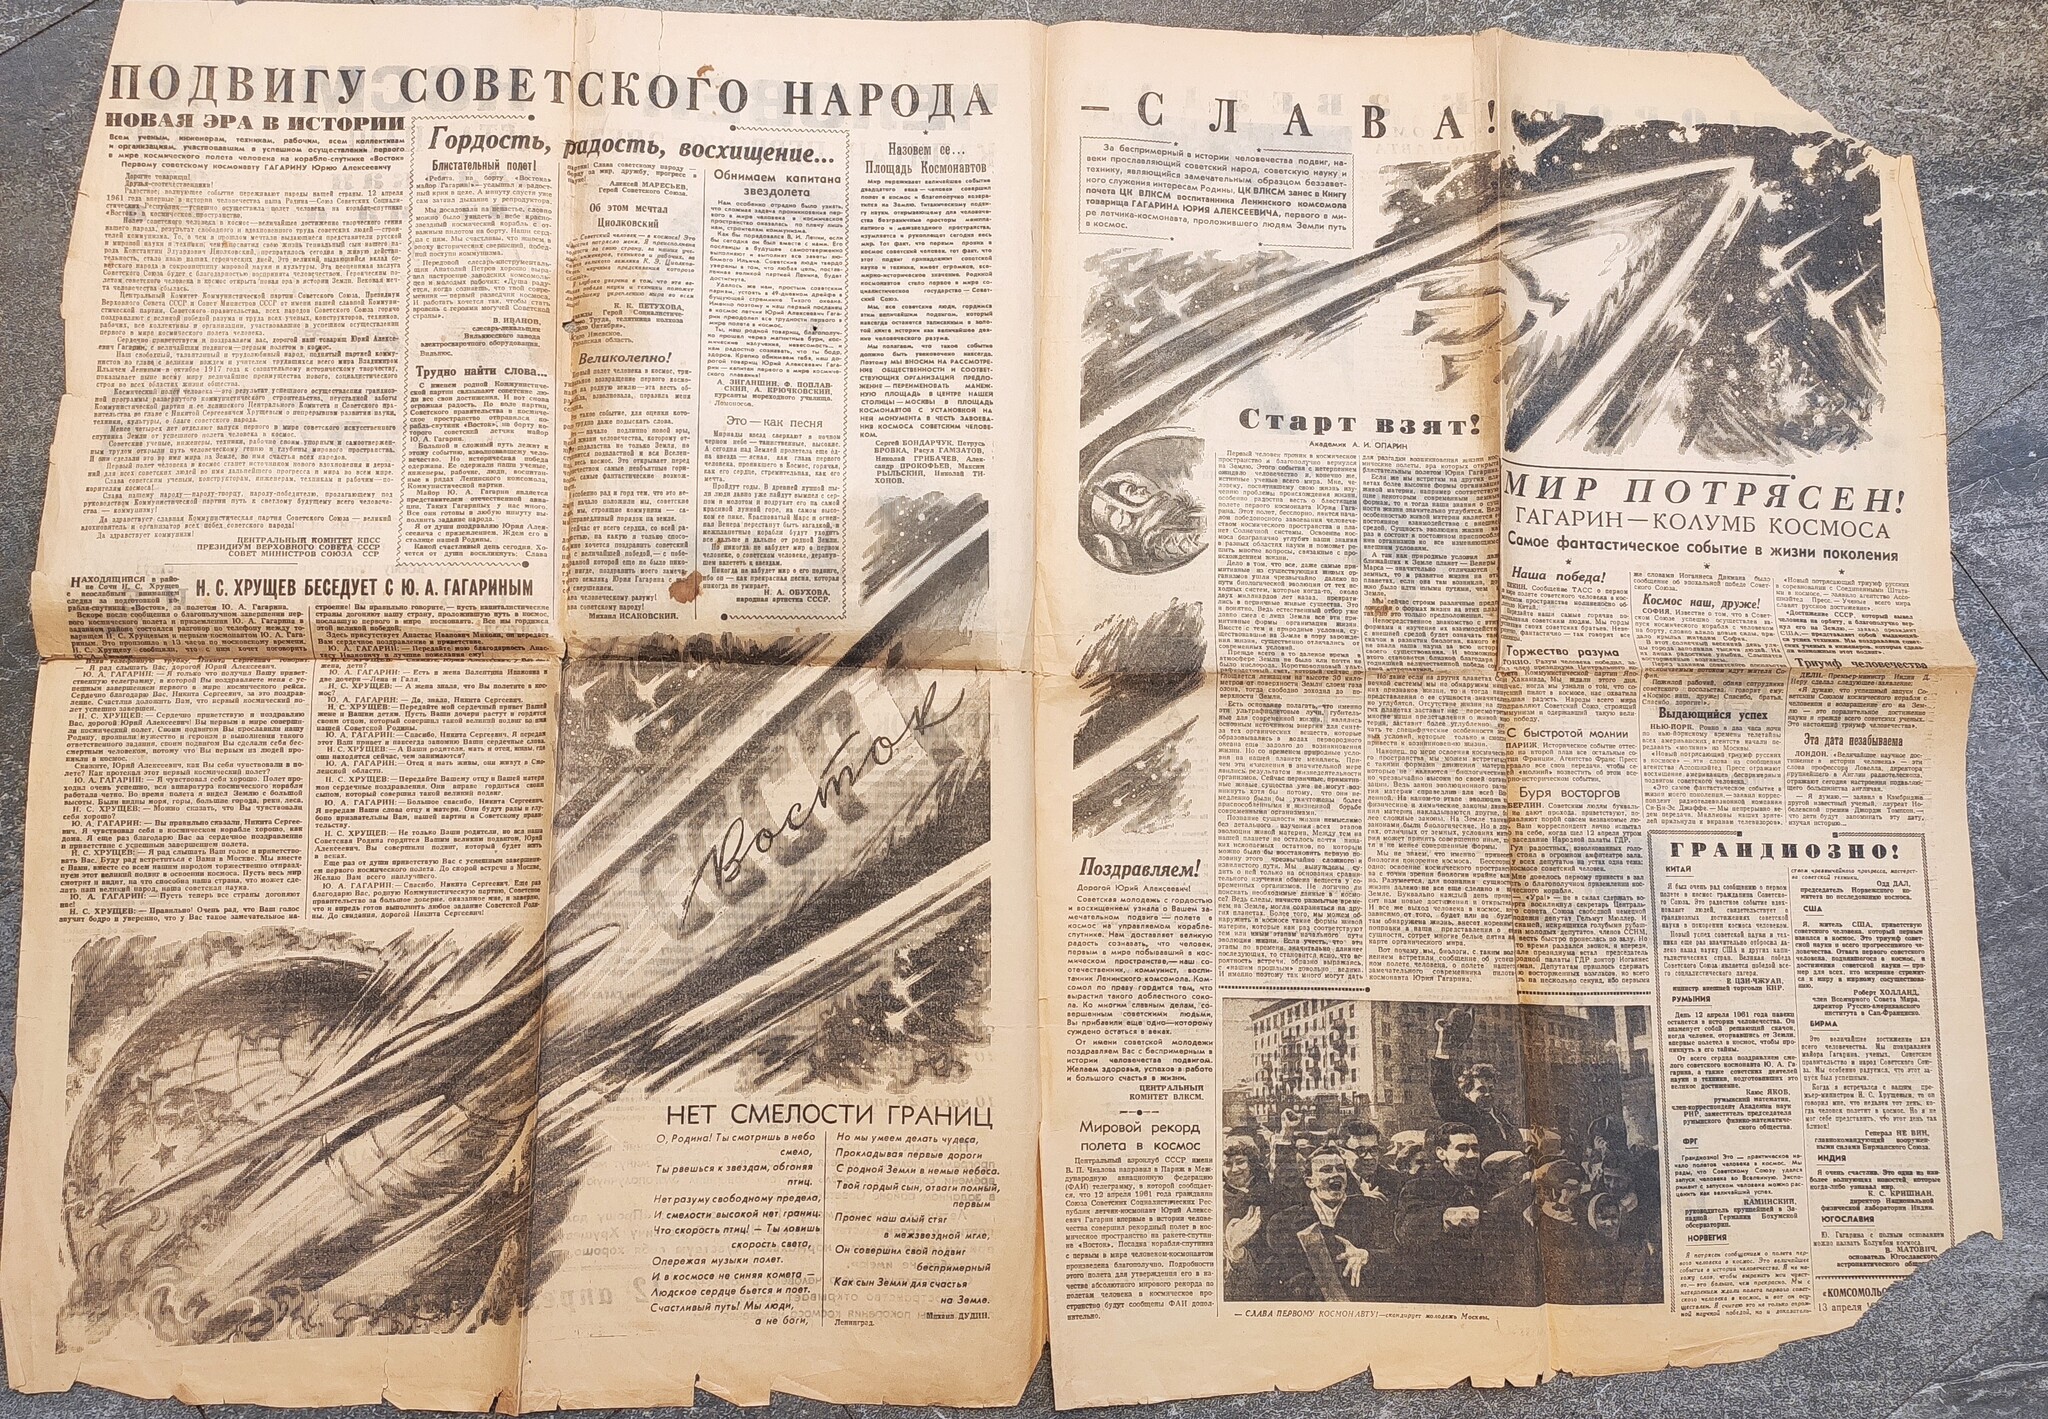 Newspapers dedicated to the flight of Yuri Gagarin - My, April 12 - Cosmonautics Day, Yuri Gagarin, Space, Newspapers, Rarity, TVNZ, Pionerskaya Pravda, Longpost